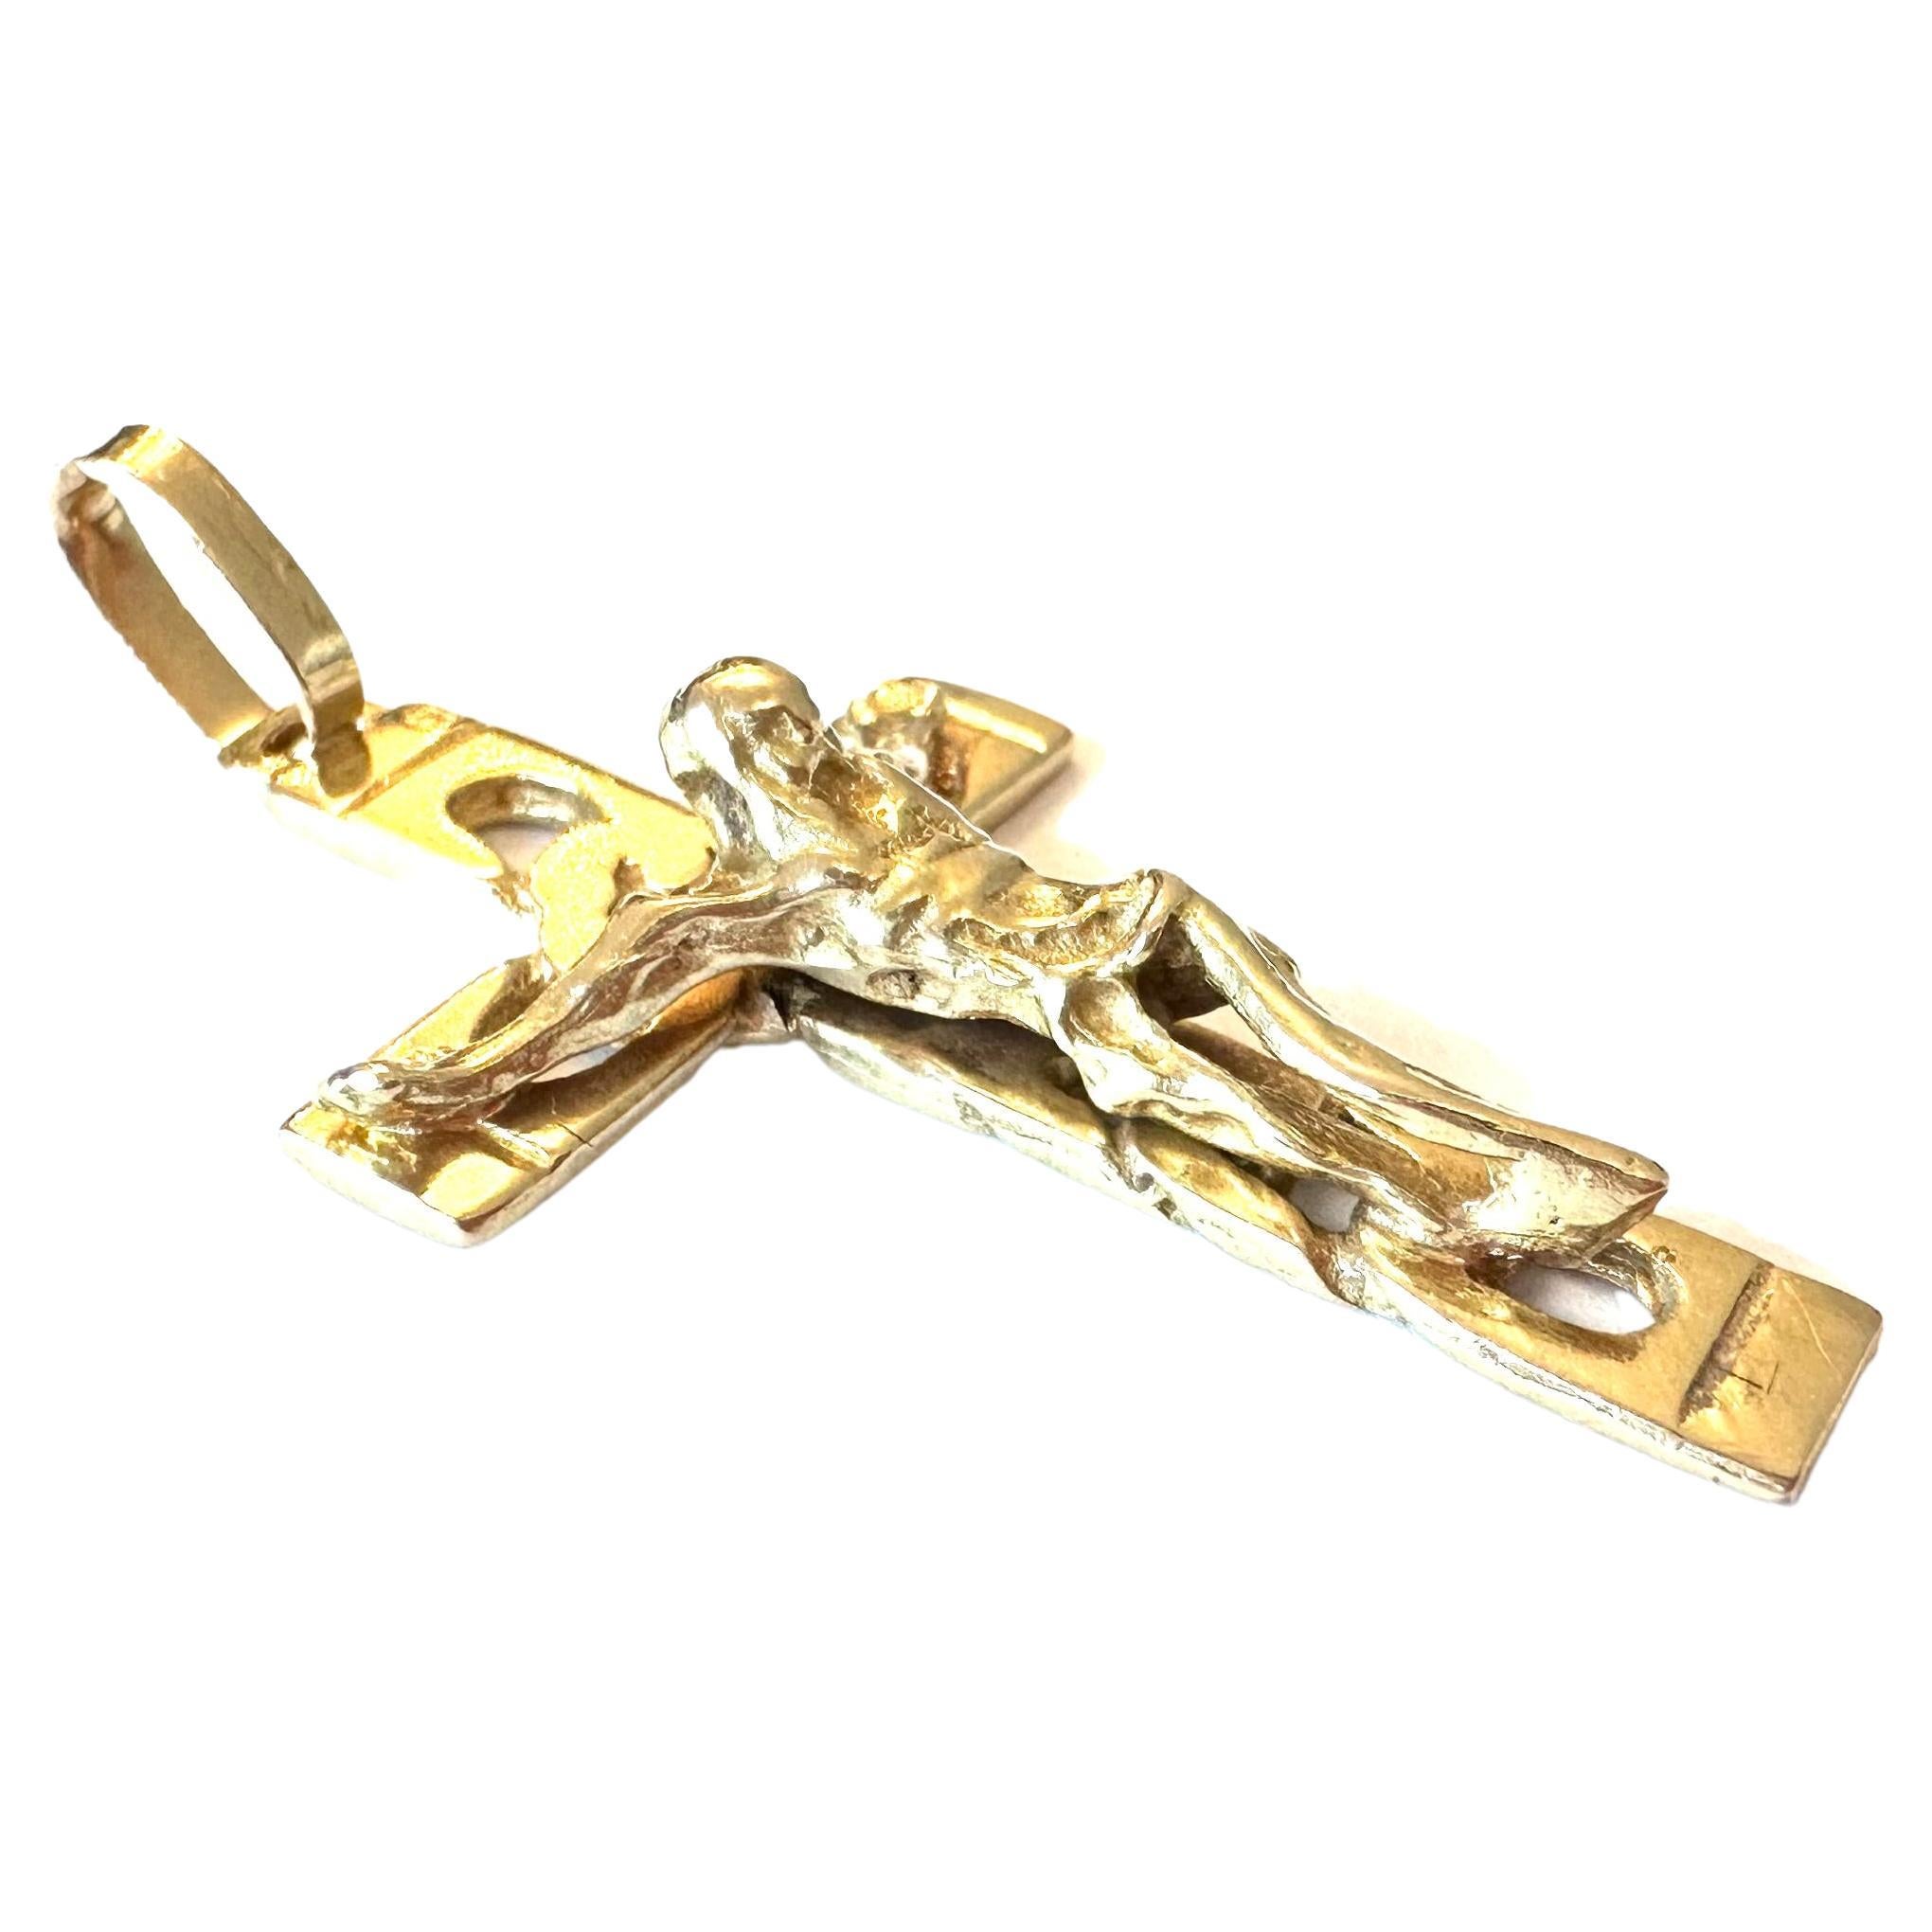 Fabuleux crucifix portugais en or jaune de 19 carats